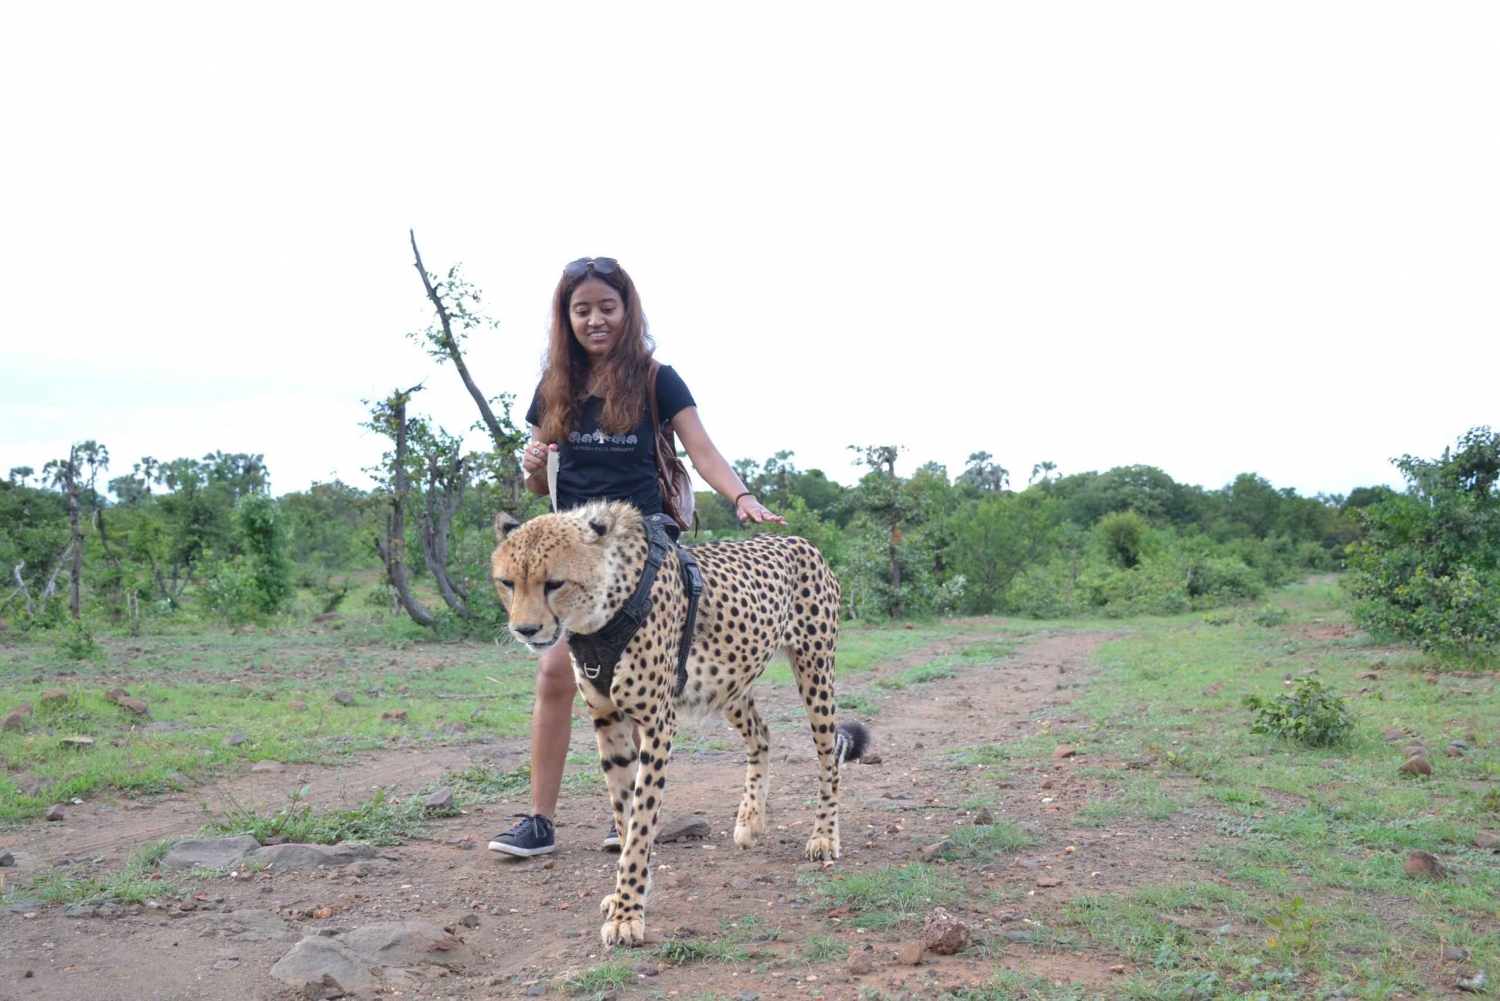 Walk with Cheetahs in Victoria Falls